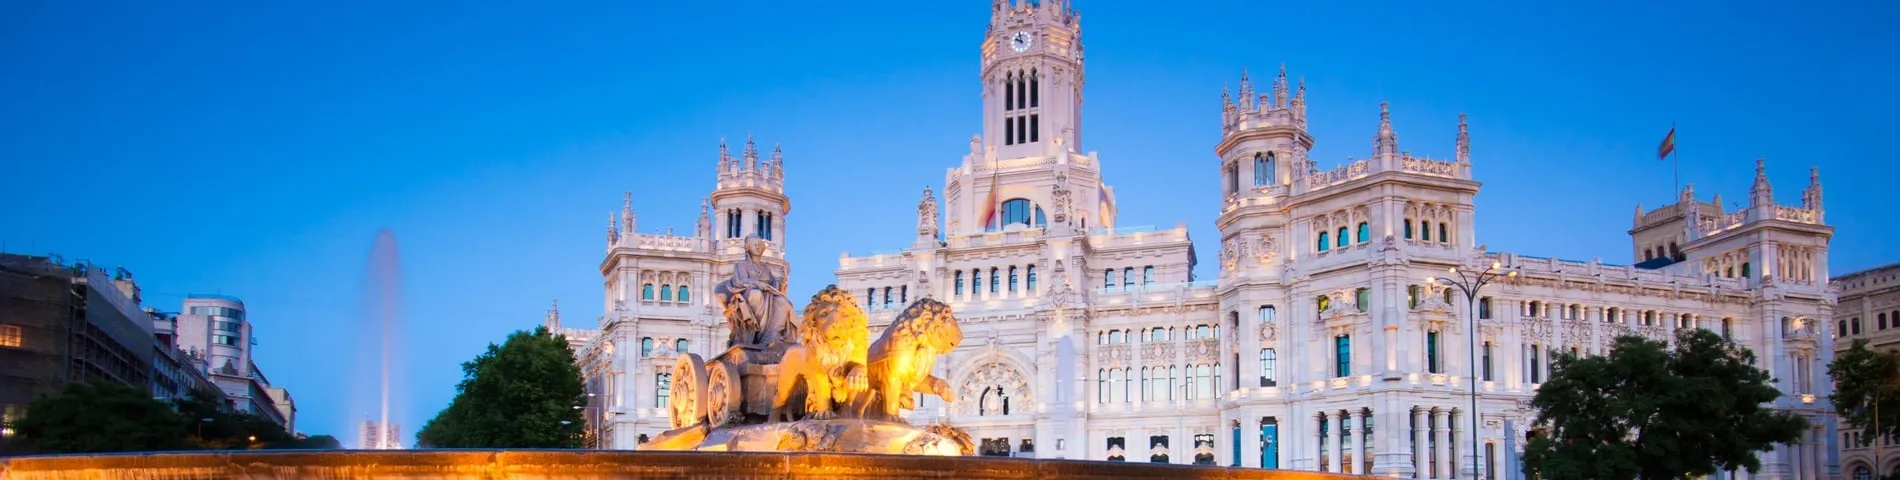 Madrid - Všoebecný